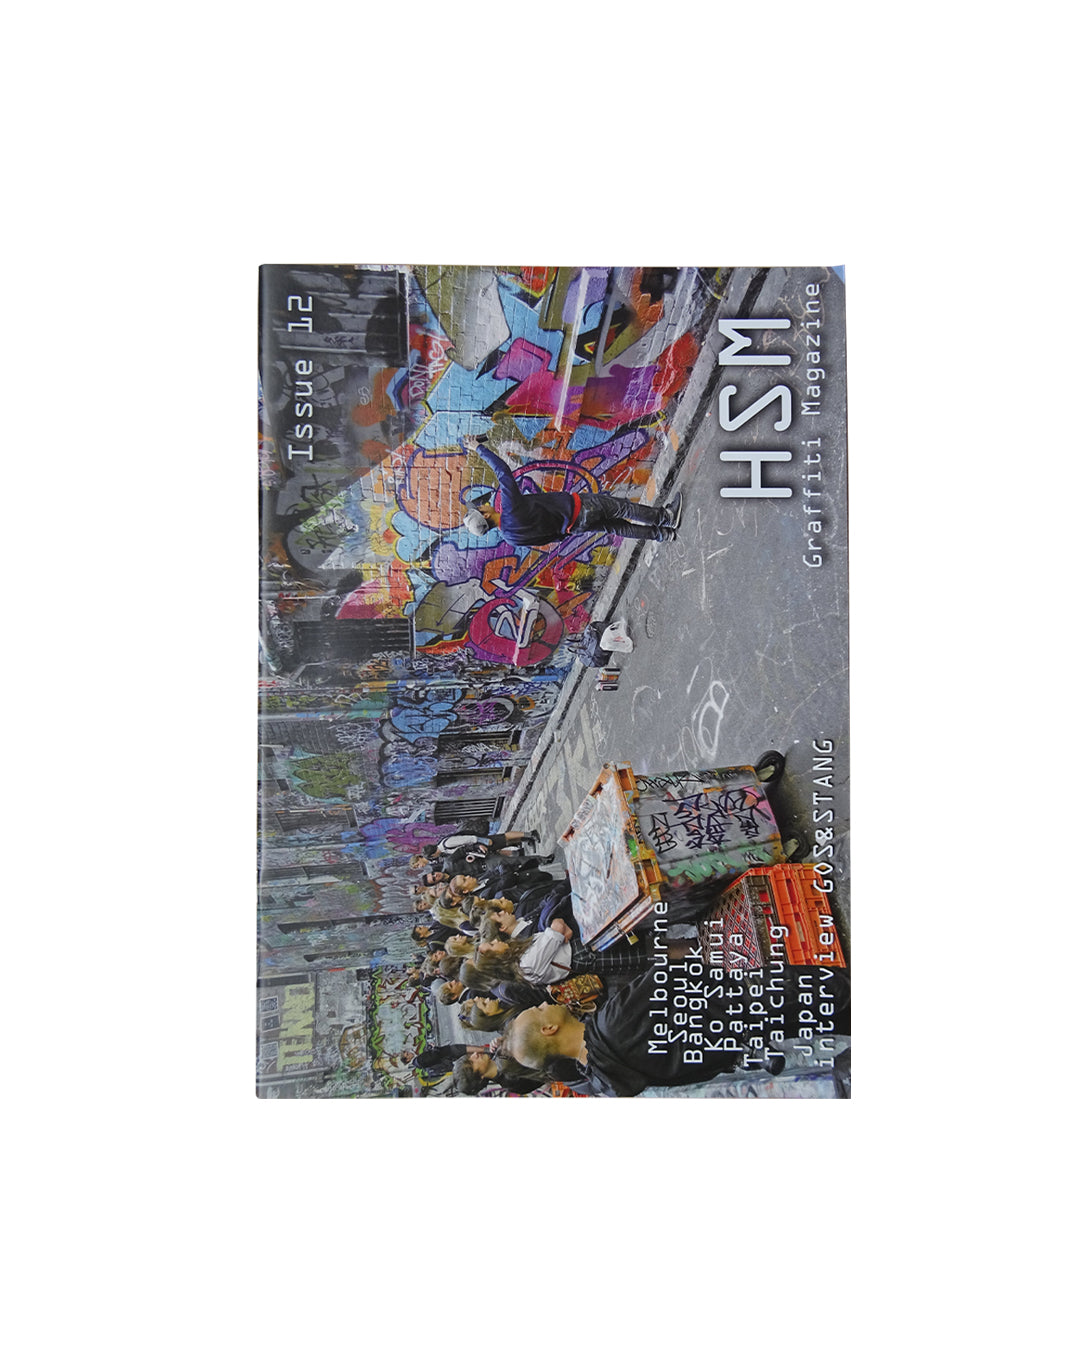 HSM Graffiti magazine (Issue9 ~ 14)